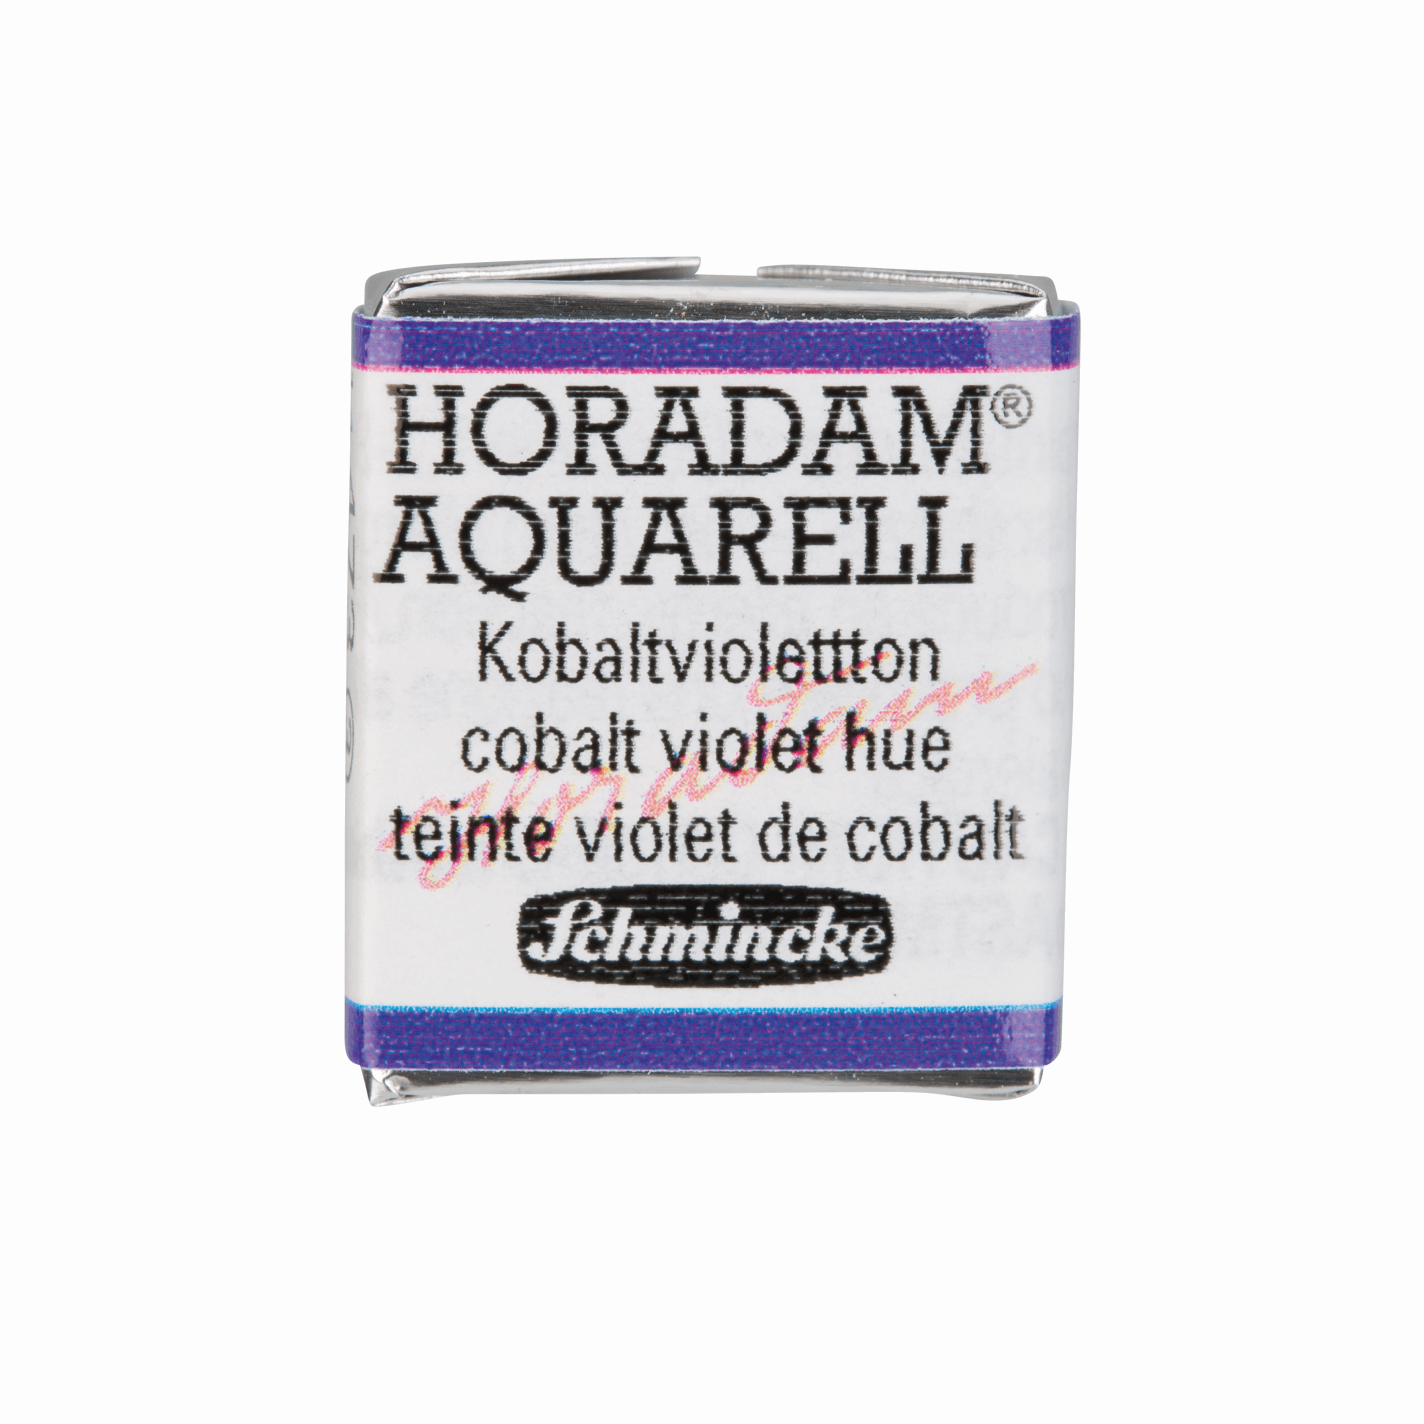 Schmincke Horadam Aquarell pans 1/2 pan Cobalt Violet Hue